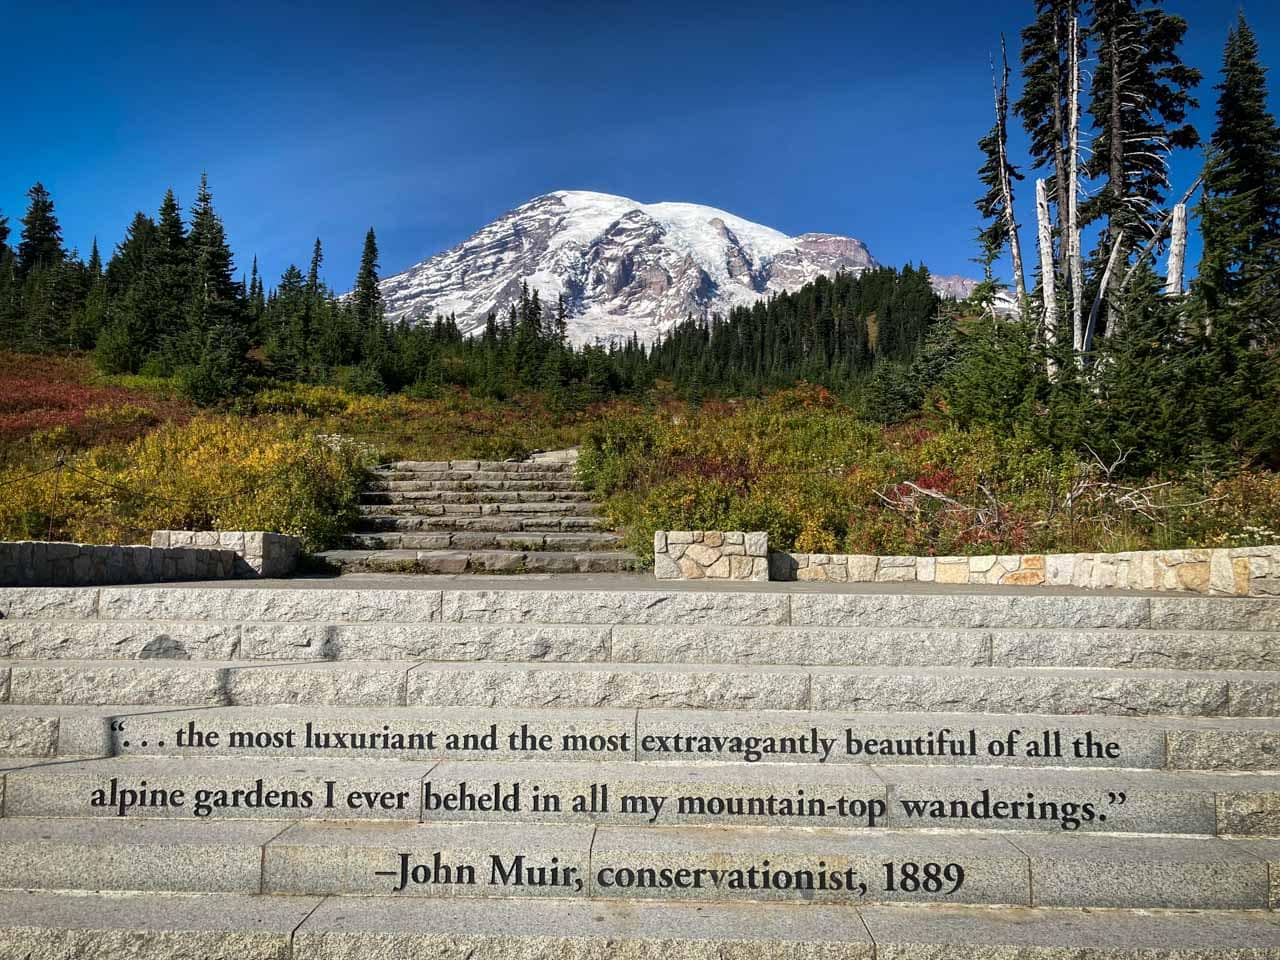 John Muir quote at Paradise, Mount Rainier National Park, Washington